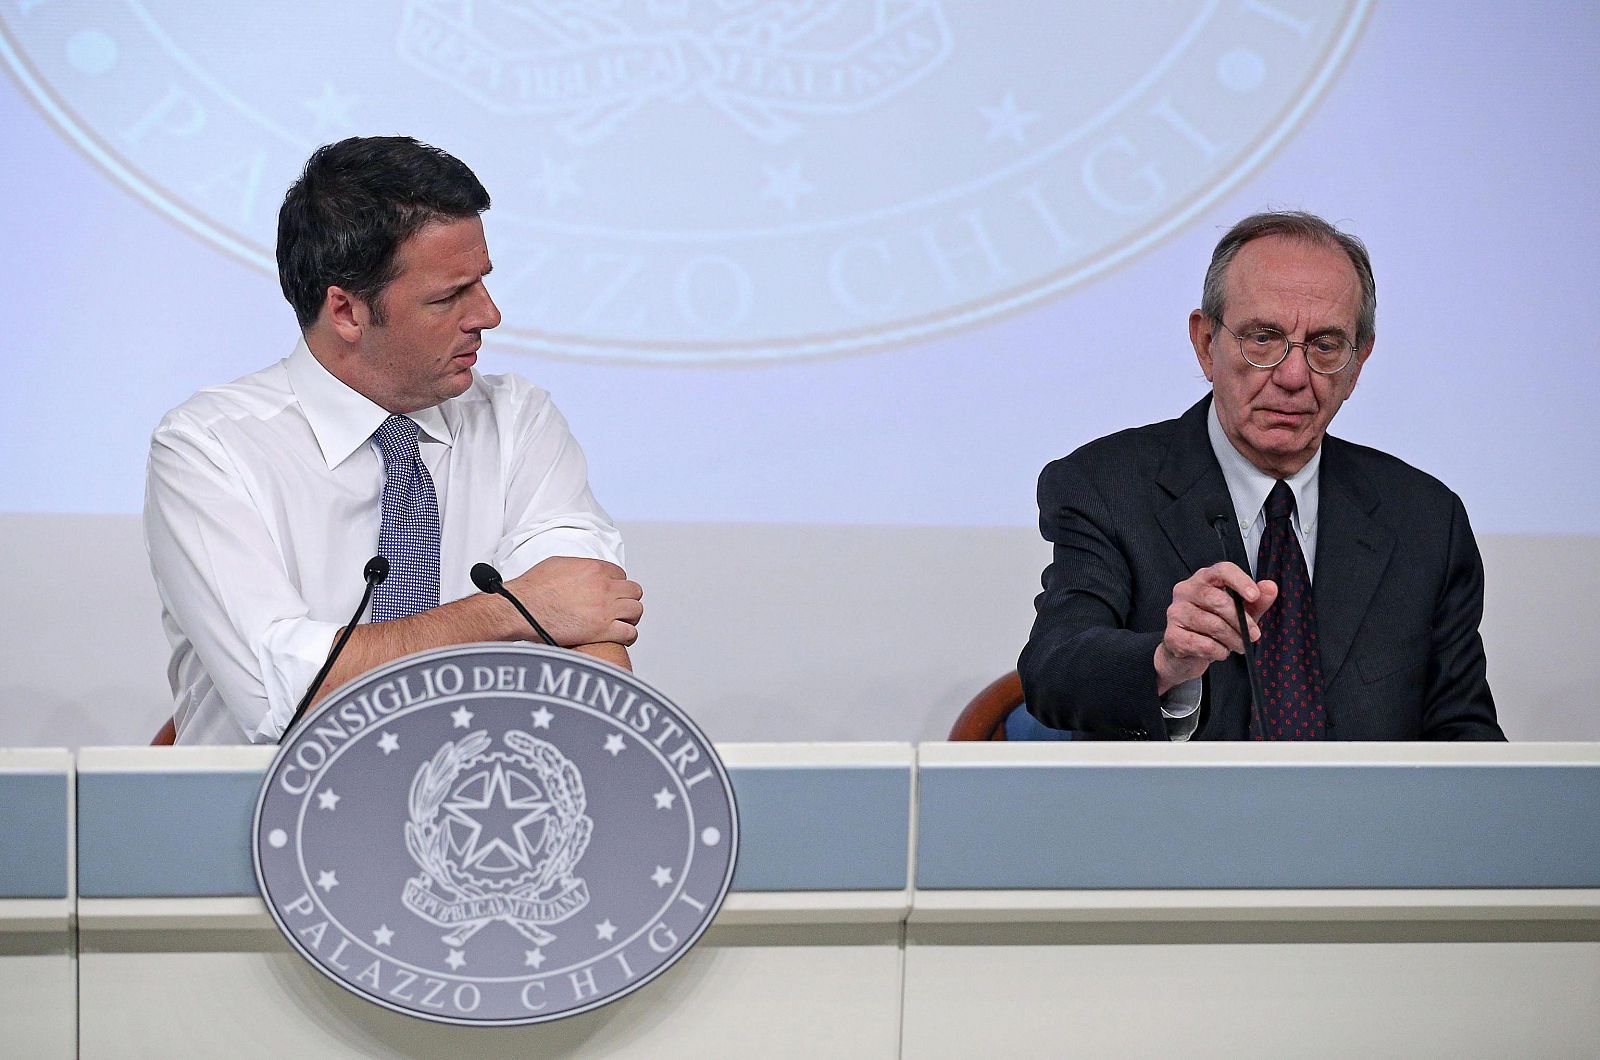 El primer ministro italiano, Matteo Renzi, habla junto al ministro italiano de Economía, Pier Carlo Padoan